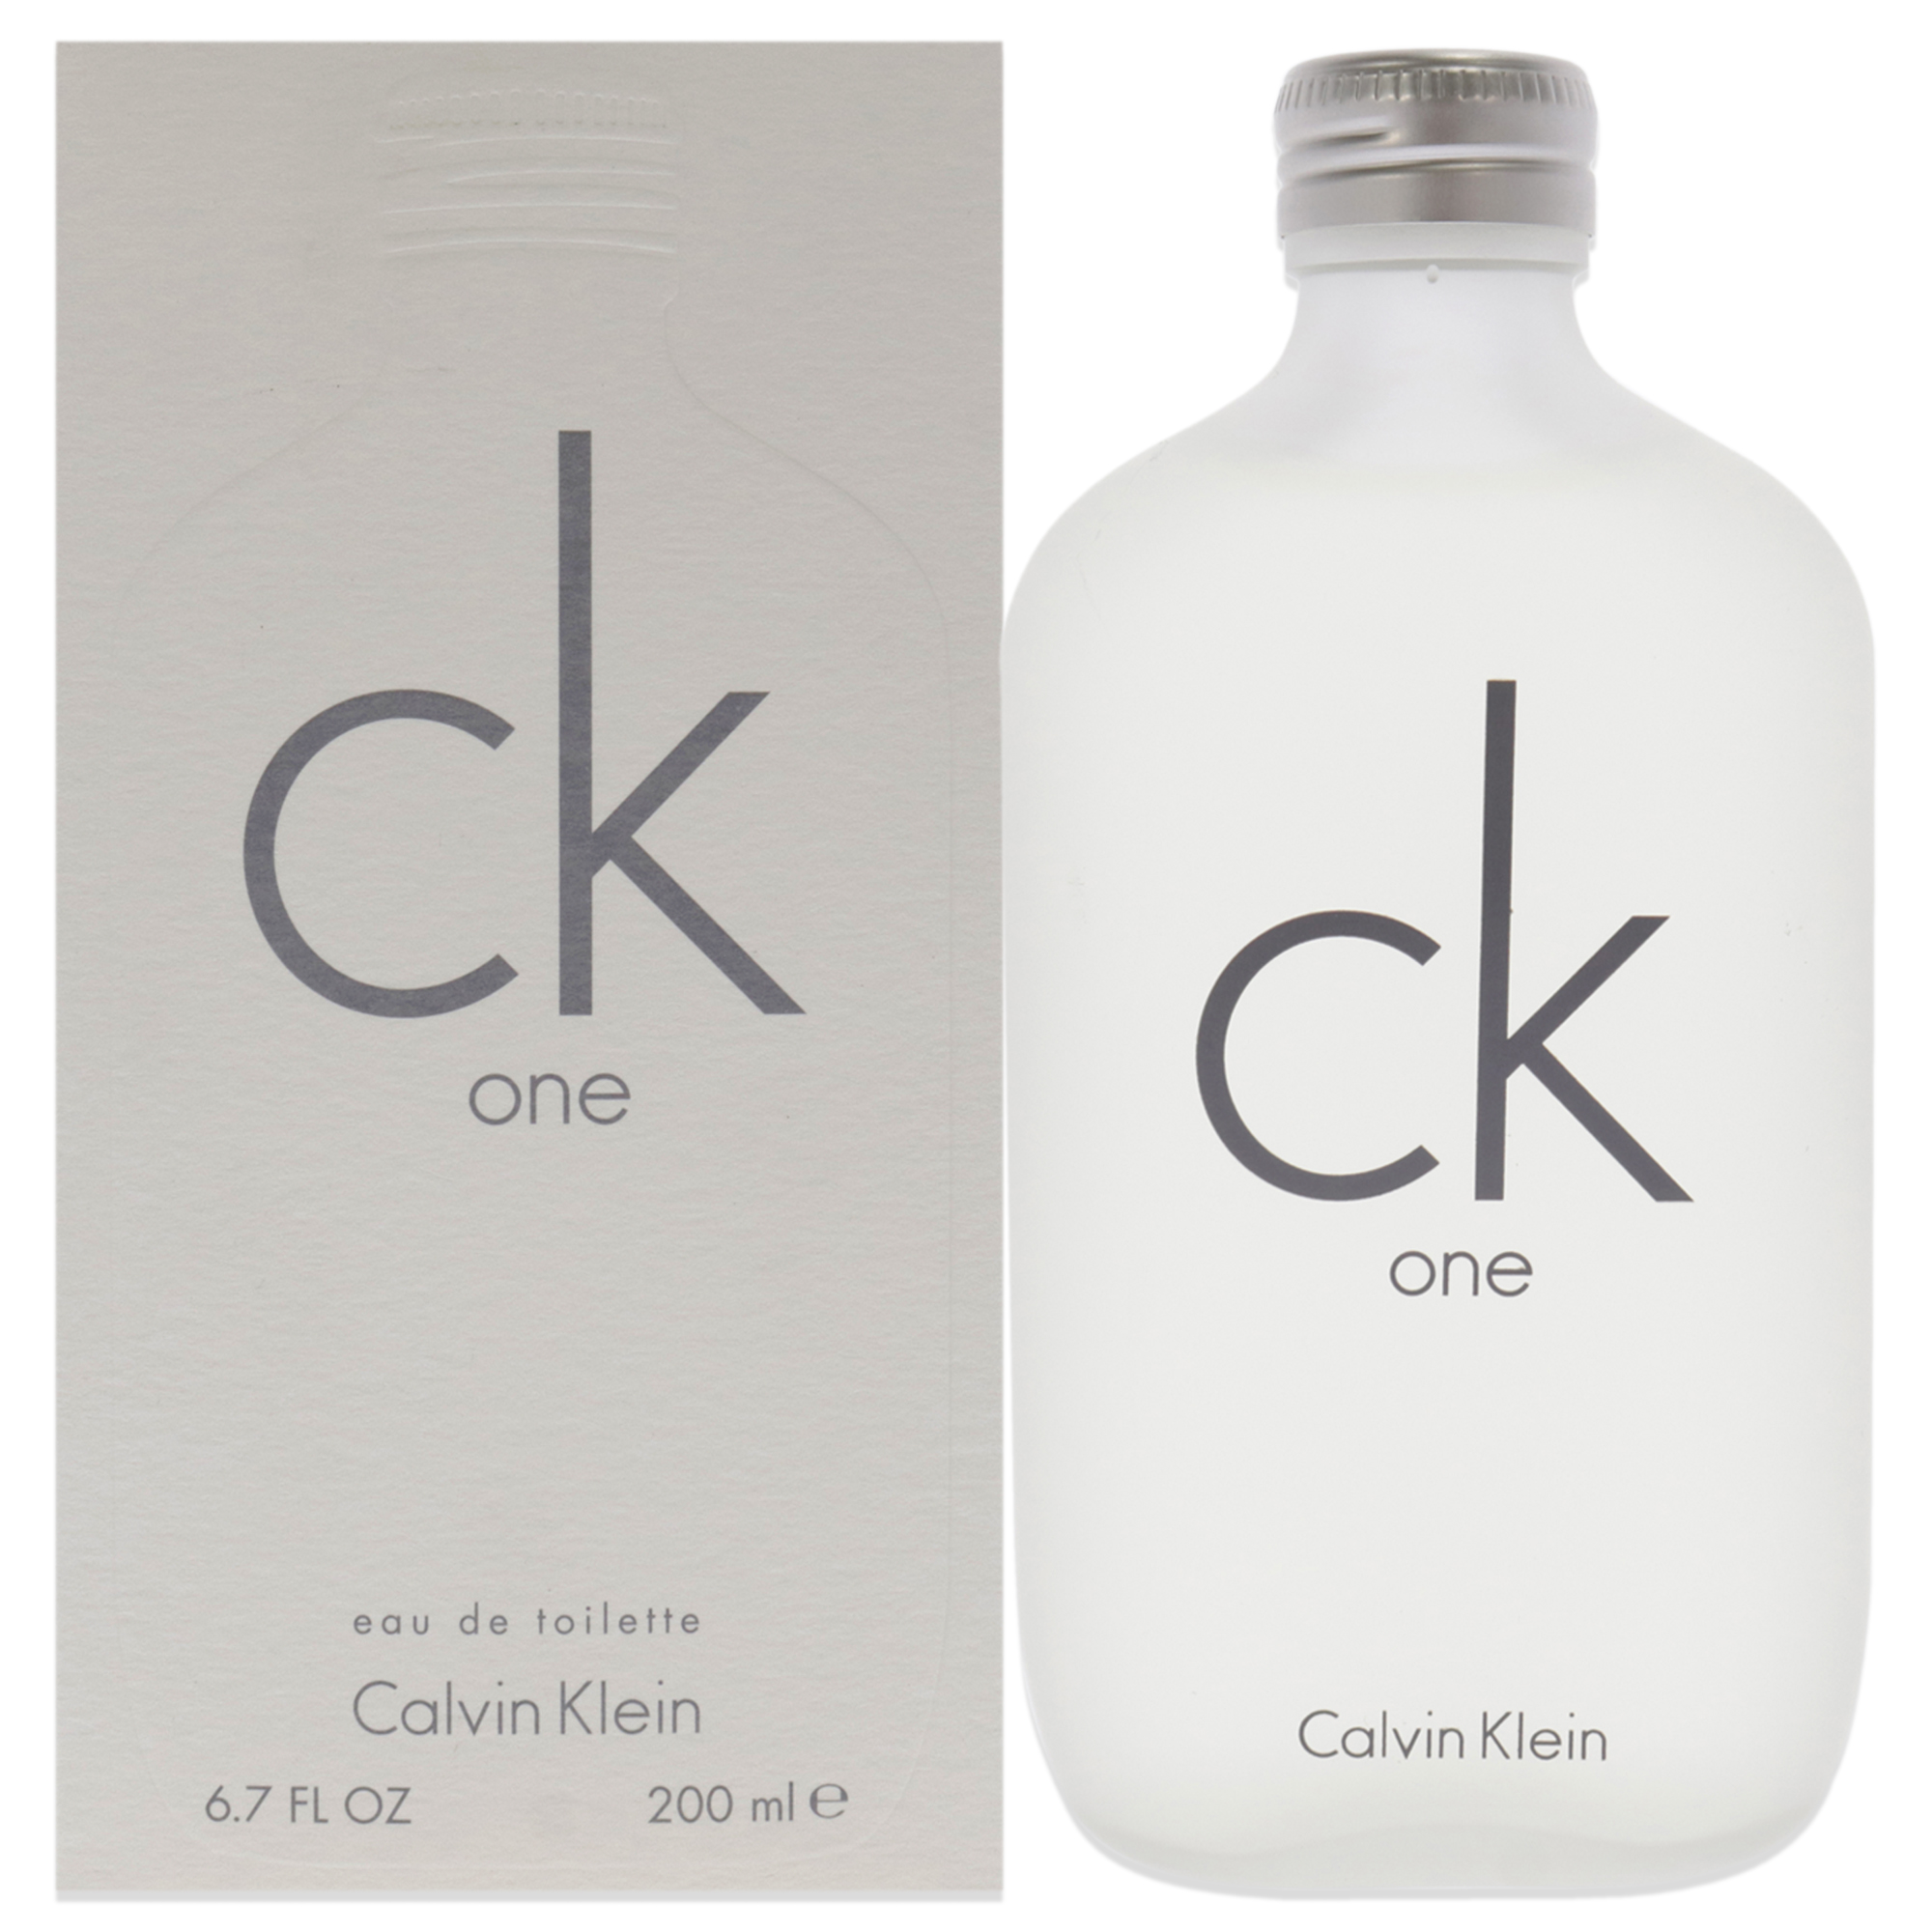 CK One by Calvin Klein for Unisex - 6.7 oz Eau...